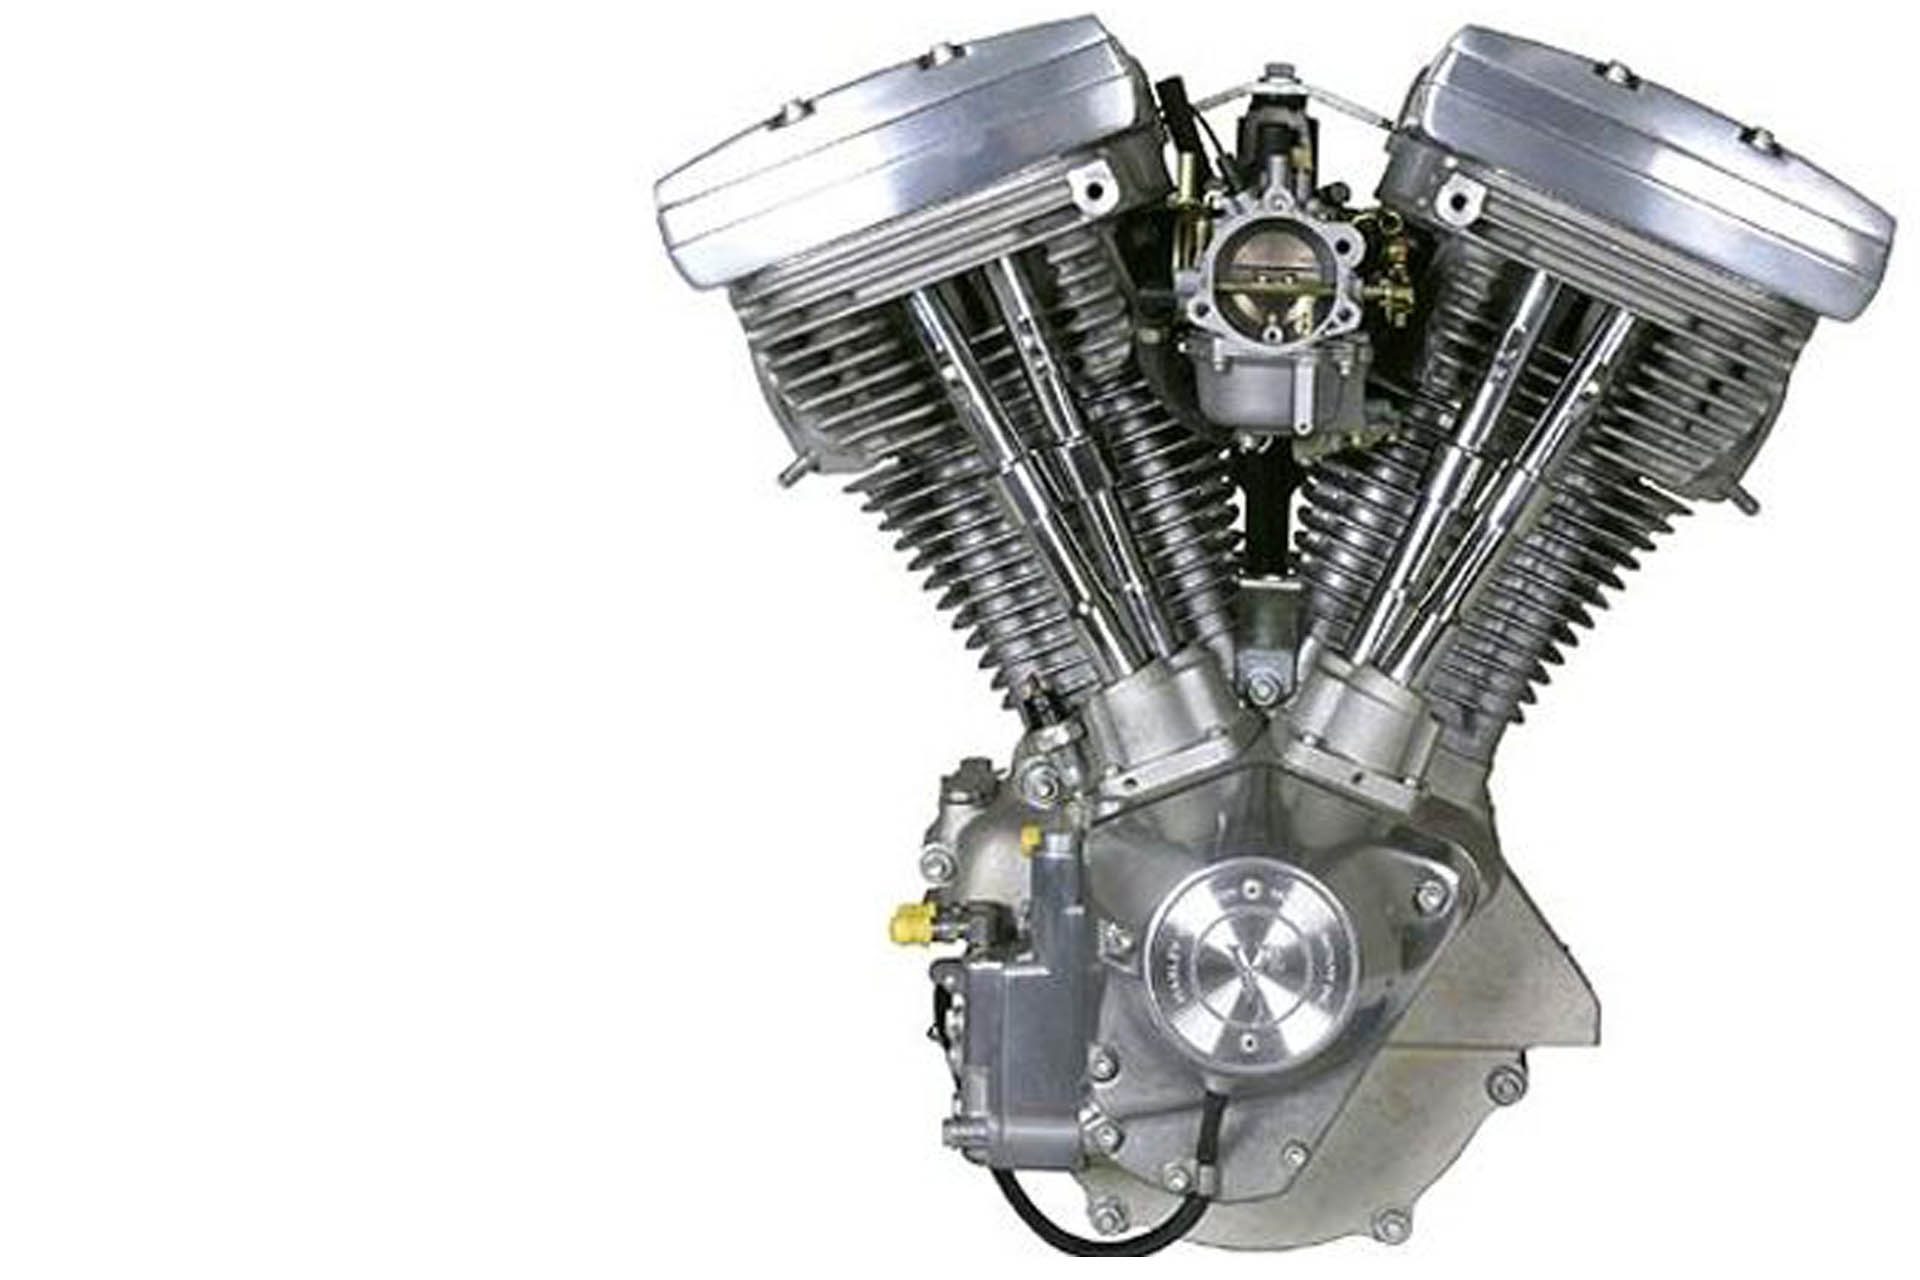 The History Of Harley Davidson Engines Thunderbike Customs